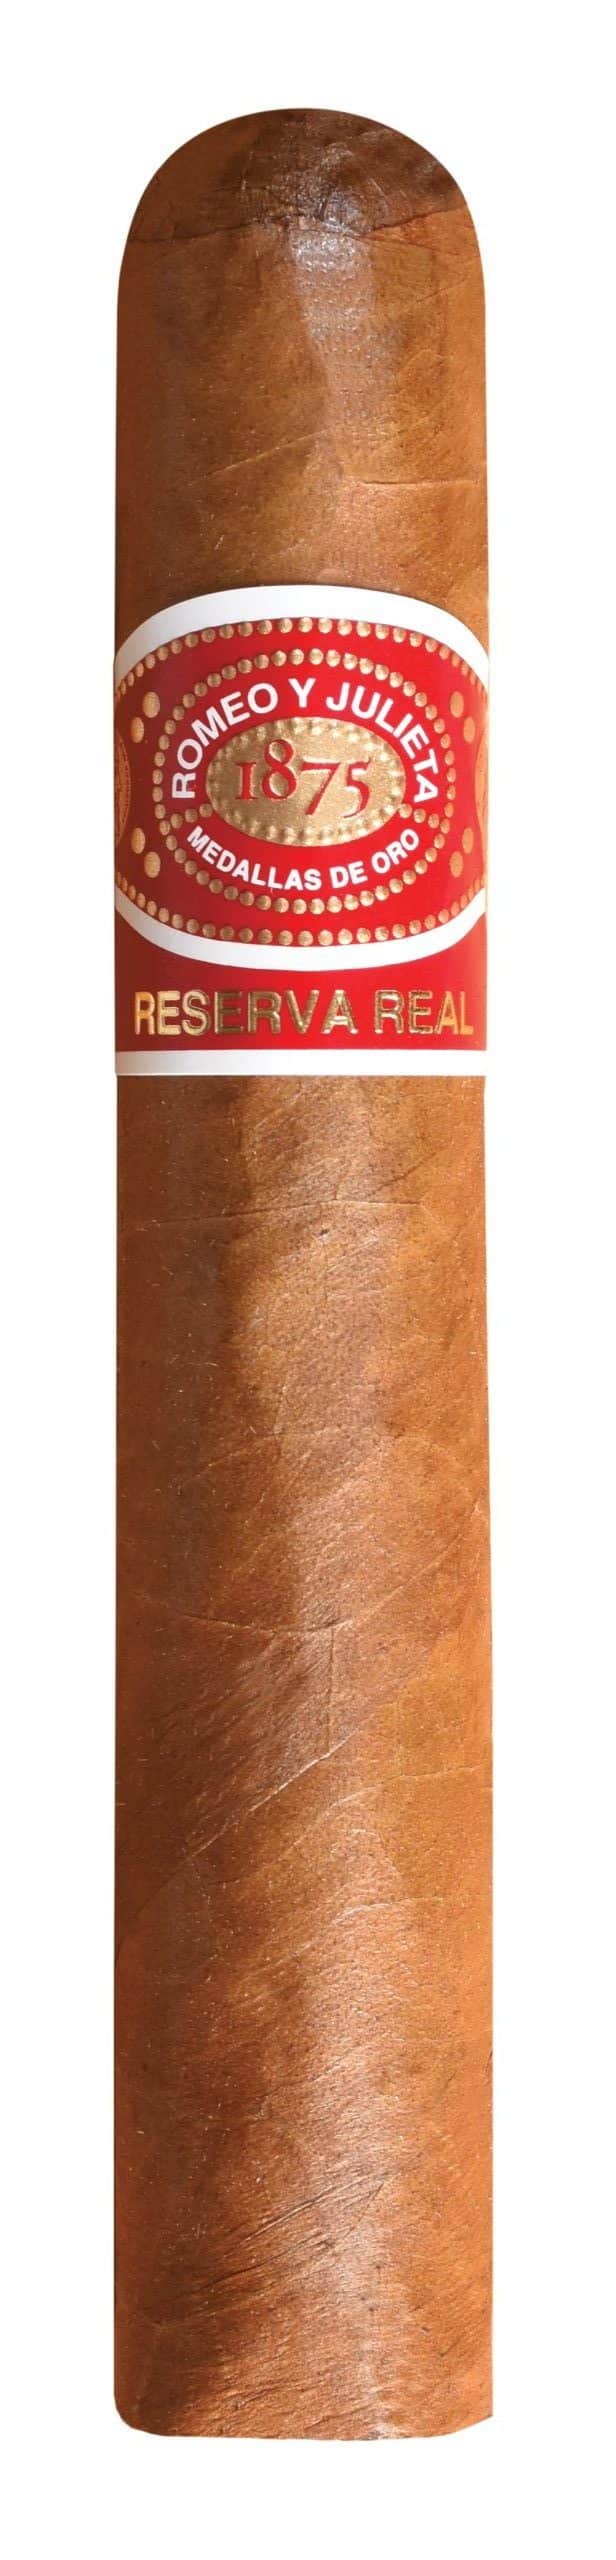 romeo y julieta reserva real robusto single cigar